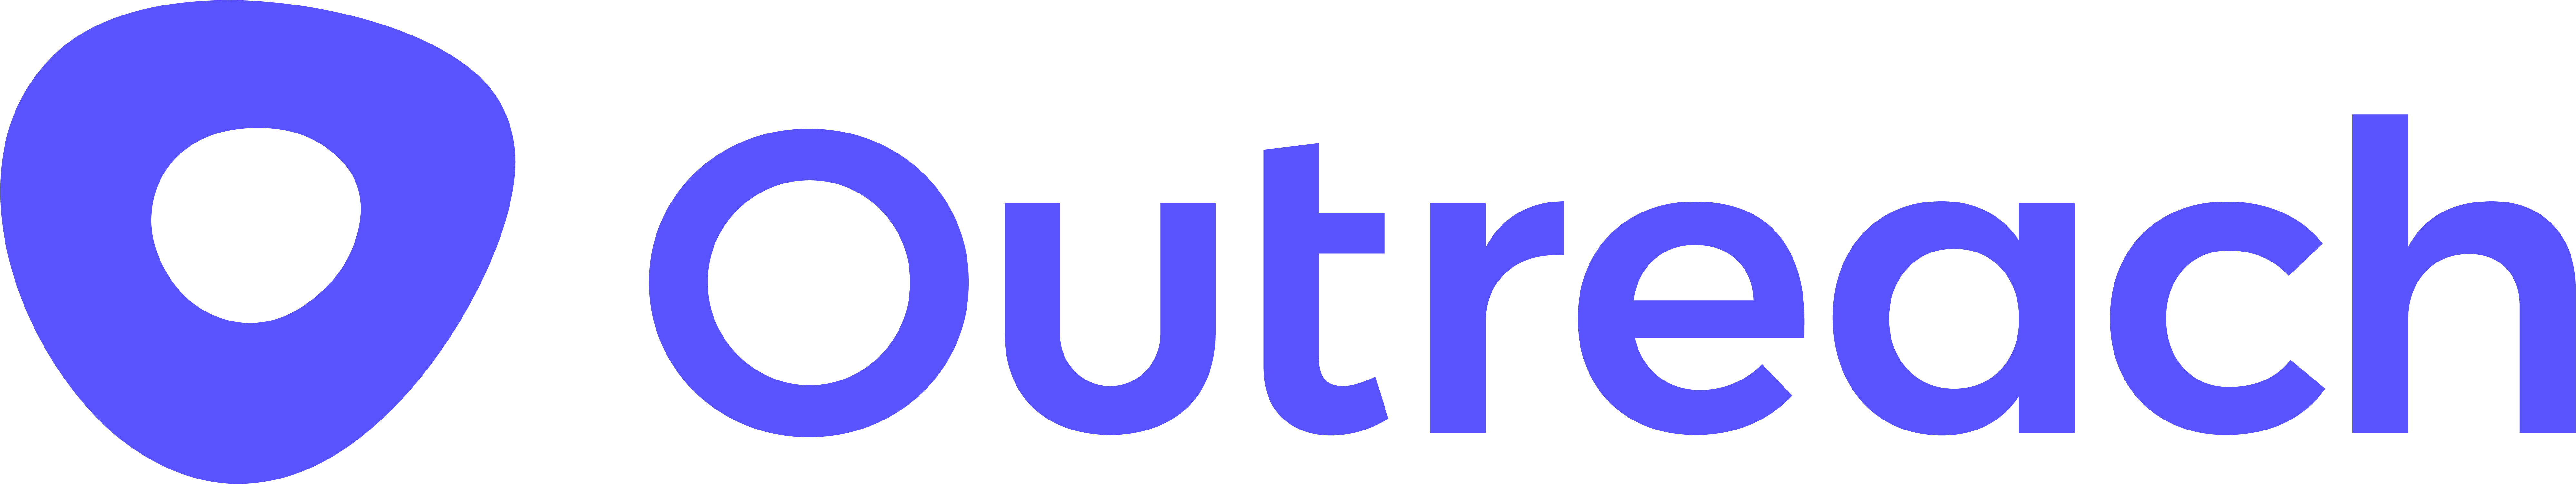 Logo outreach